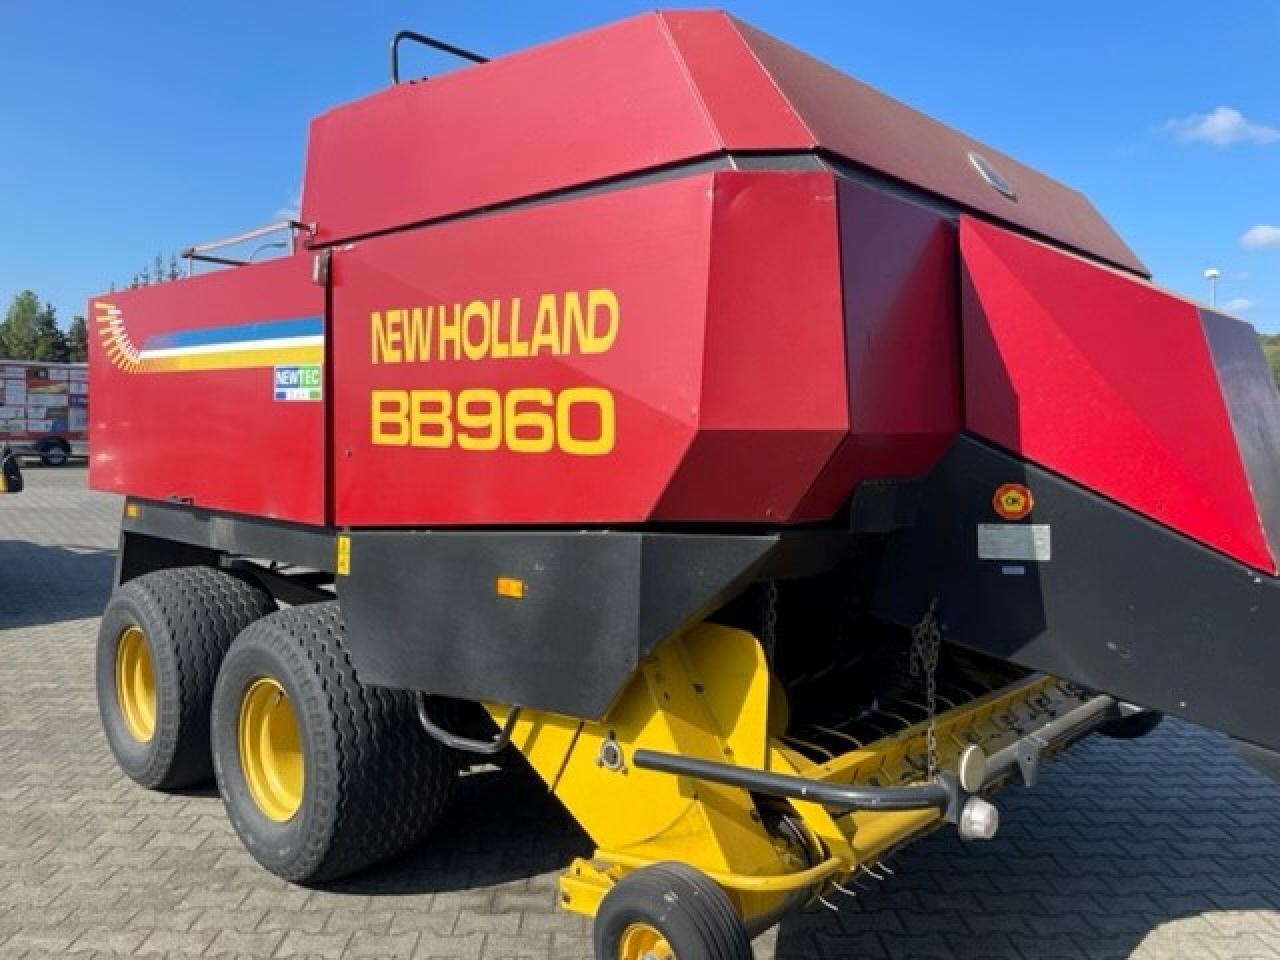 New Holland BB 960